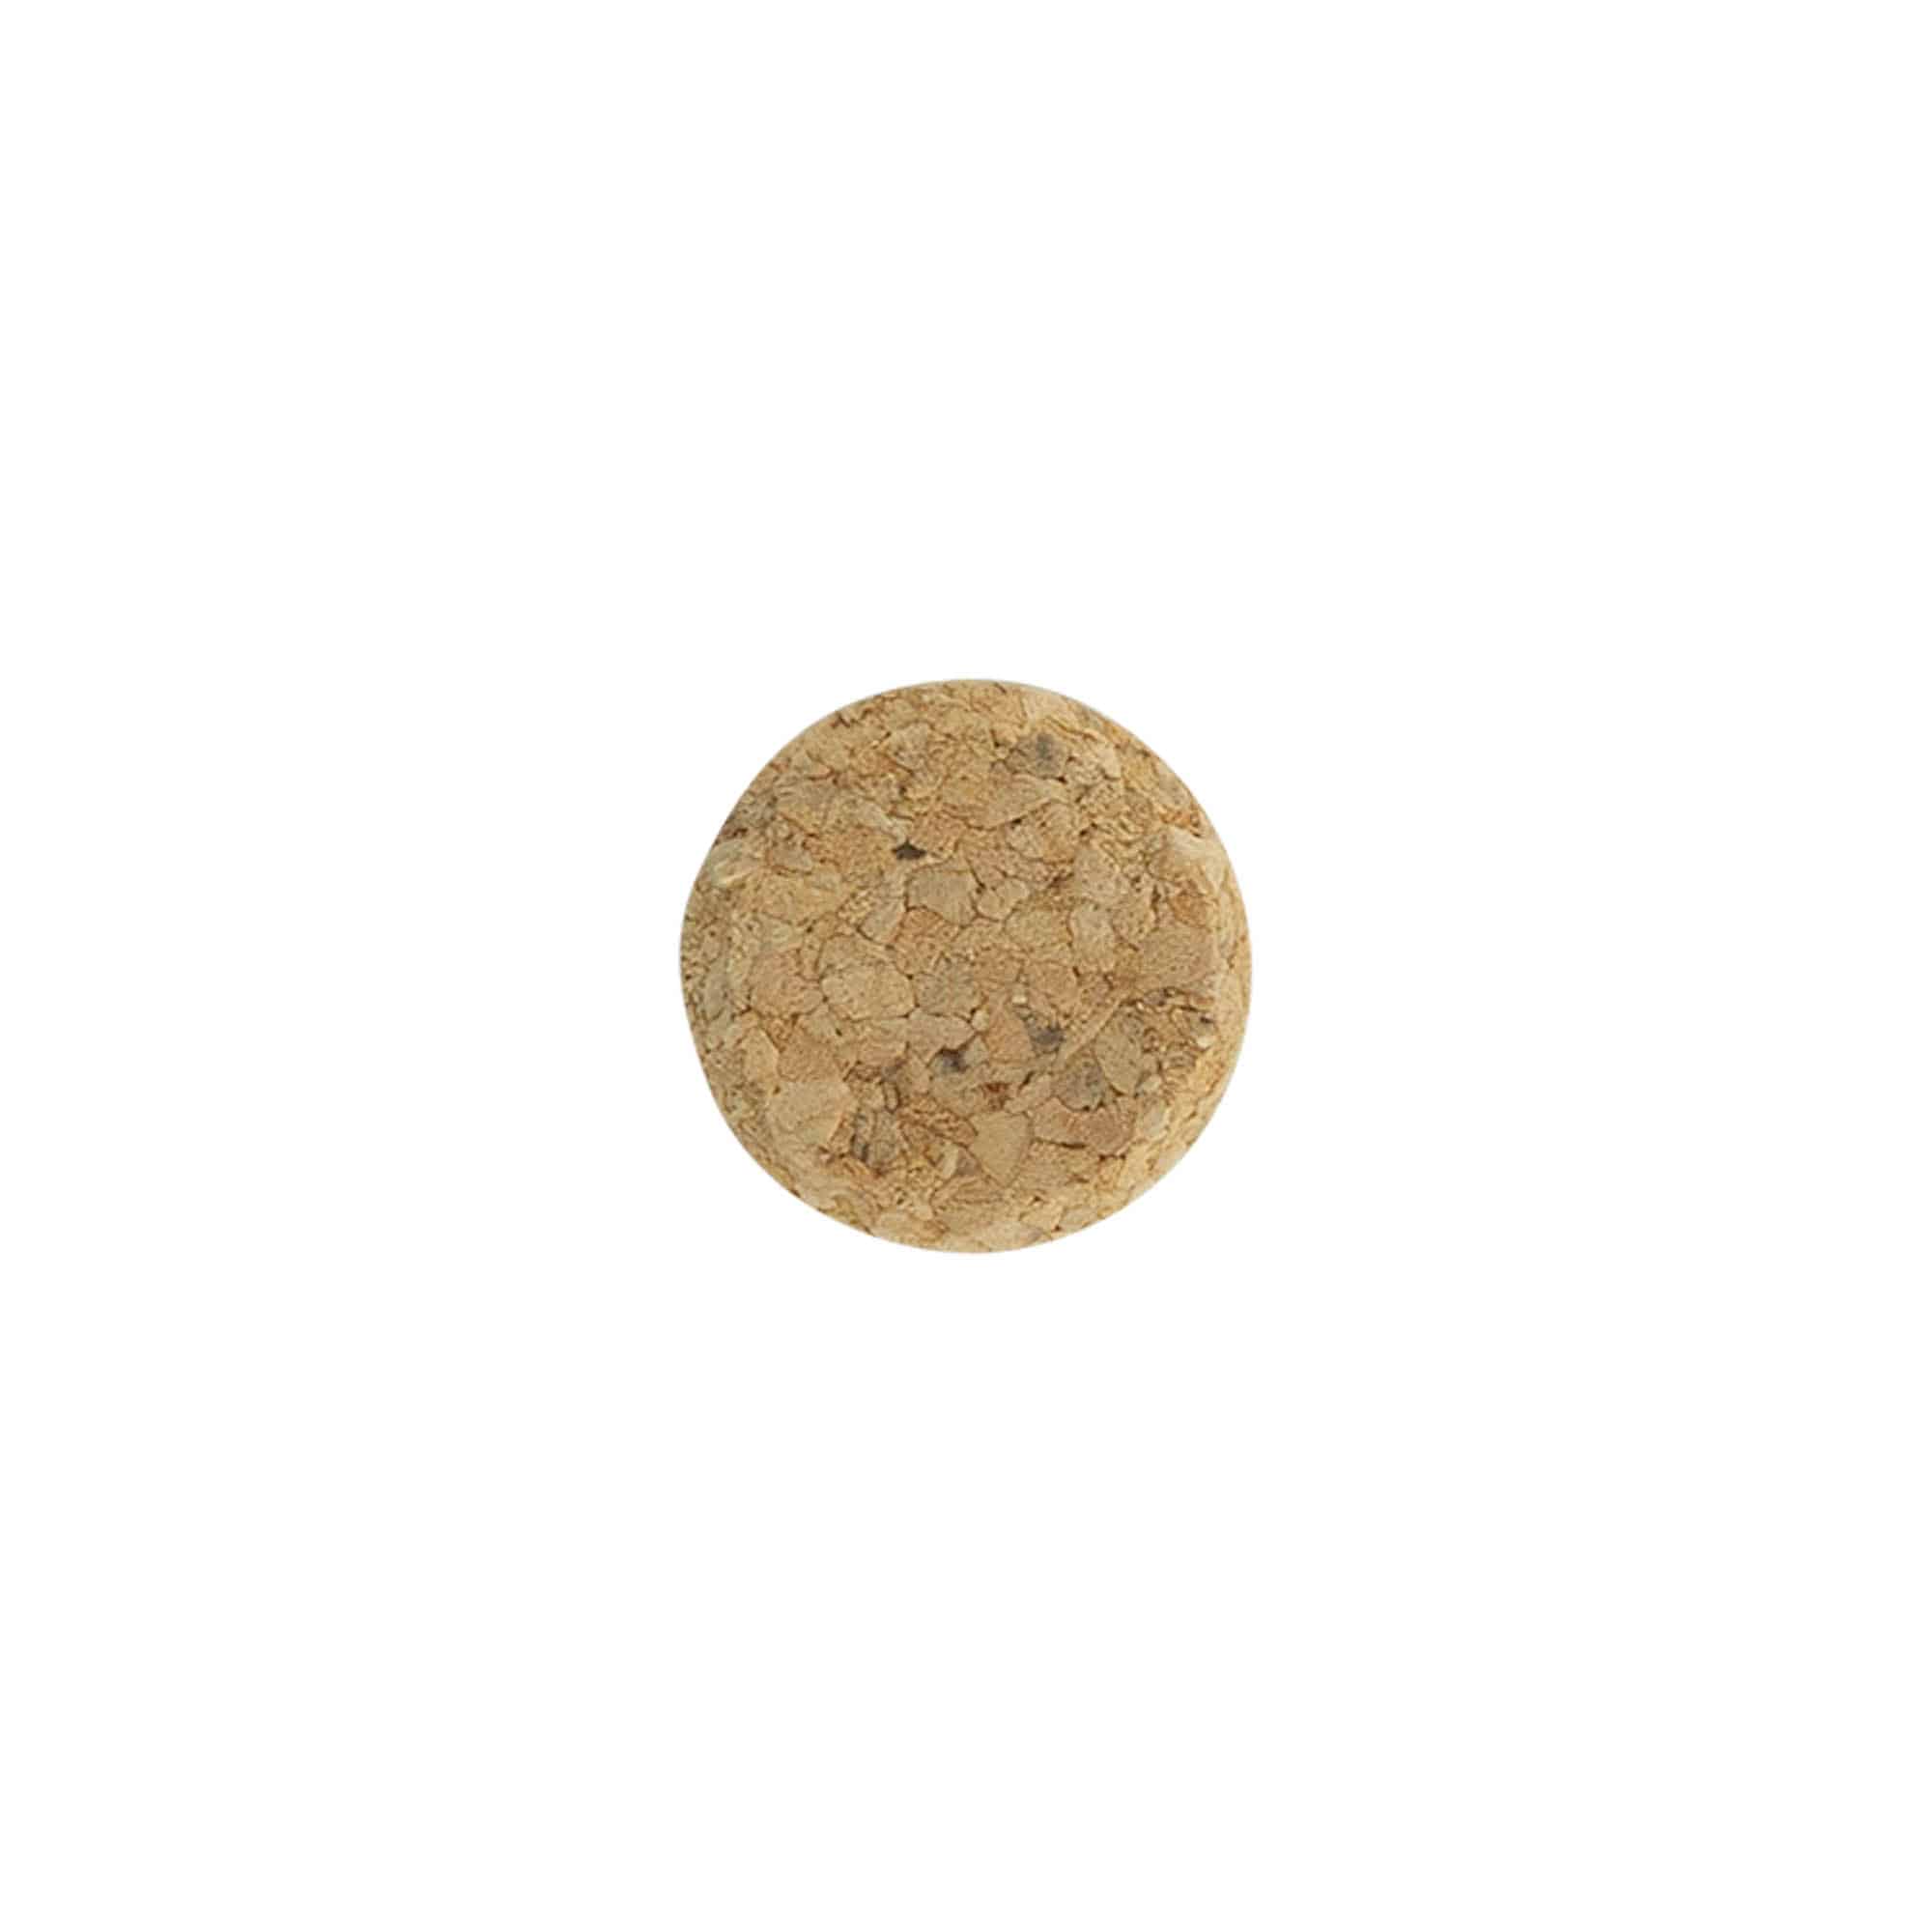 Wine cork 22.5 mm, natural cork, beige, for opening: cork